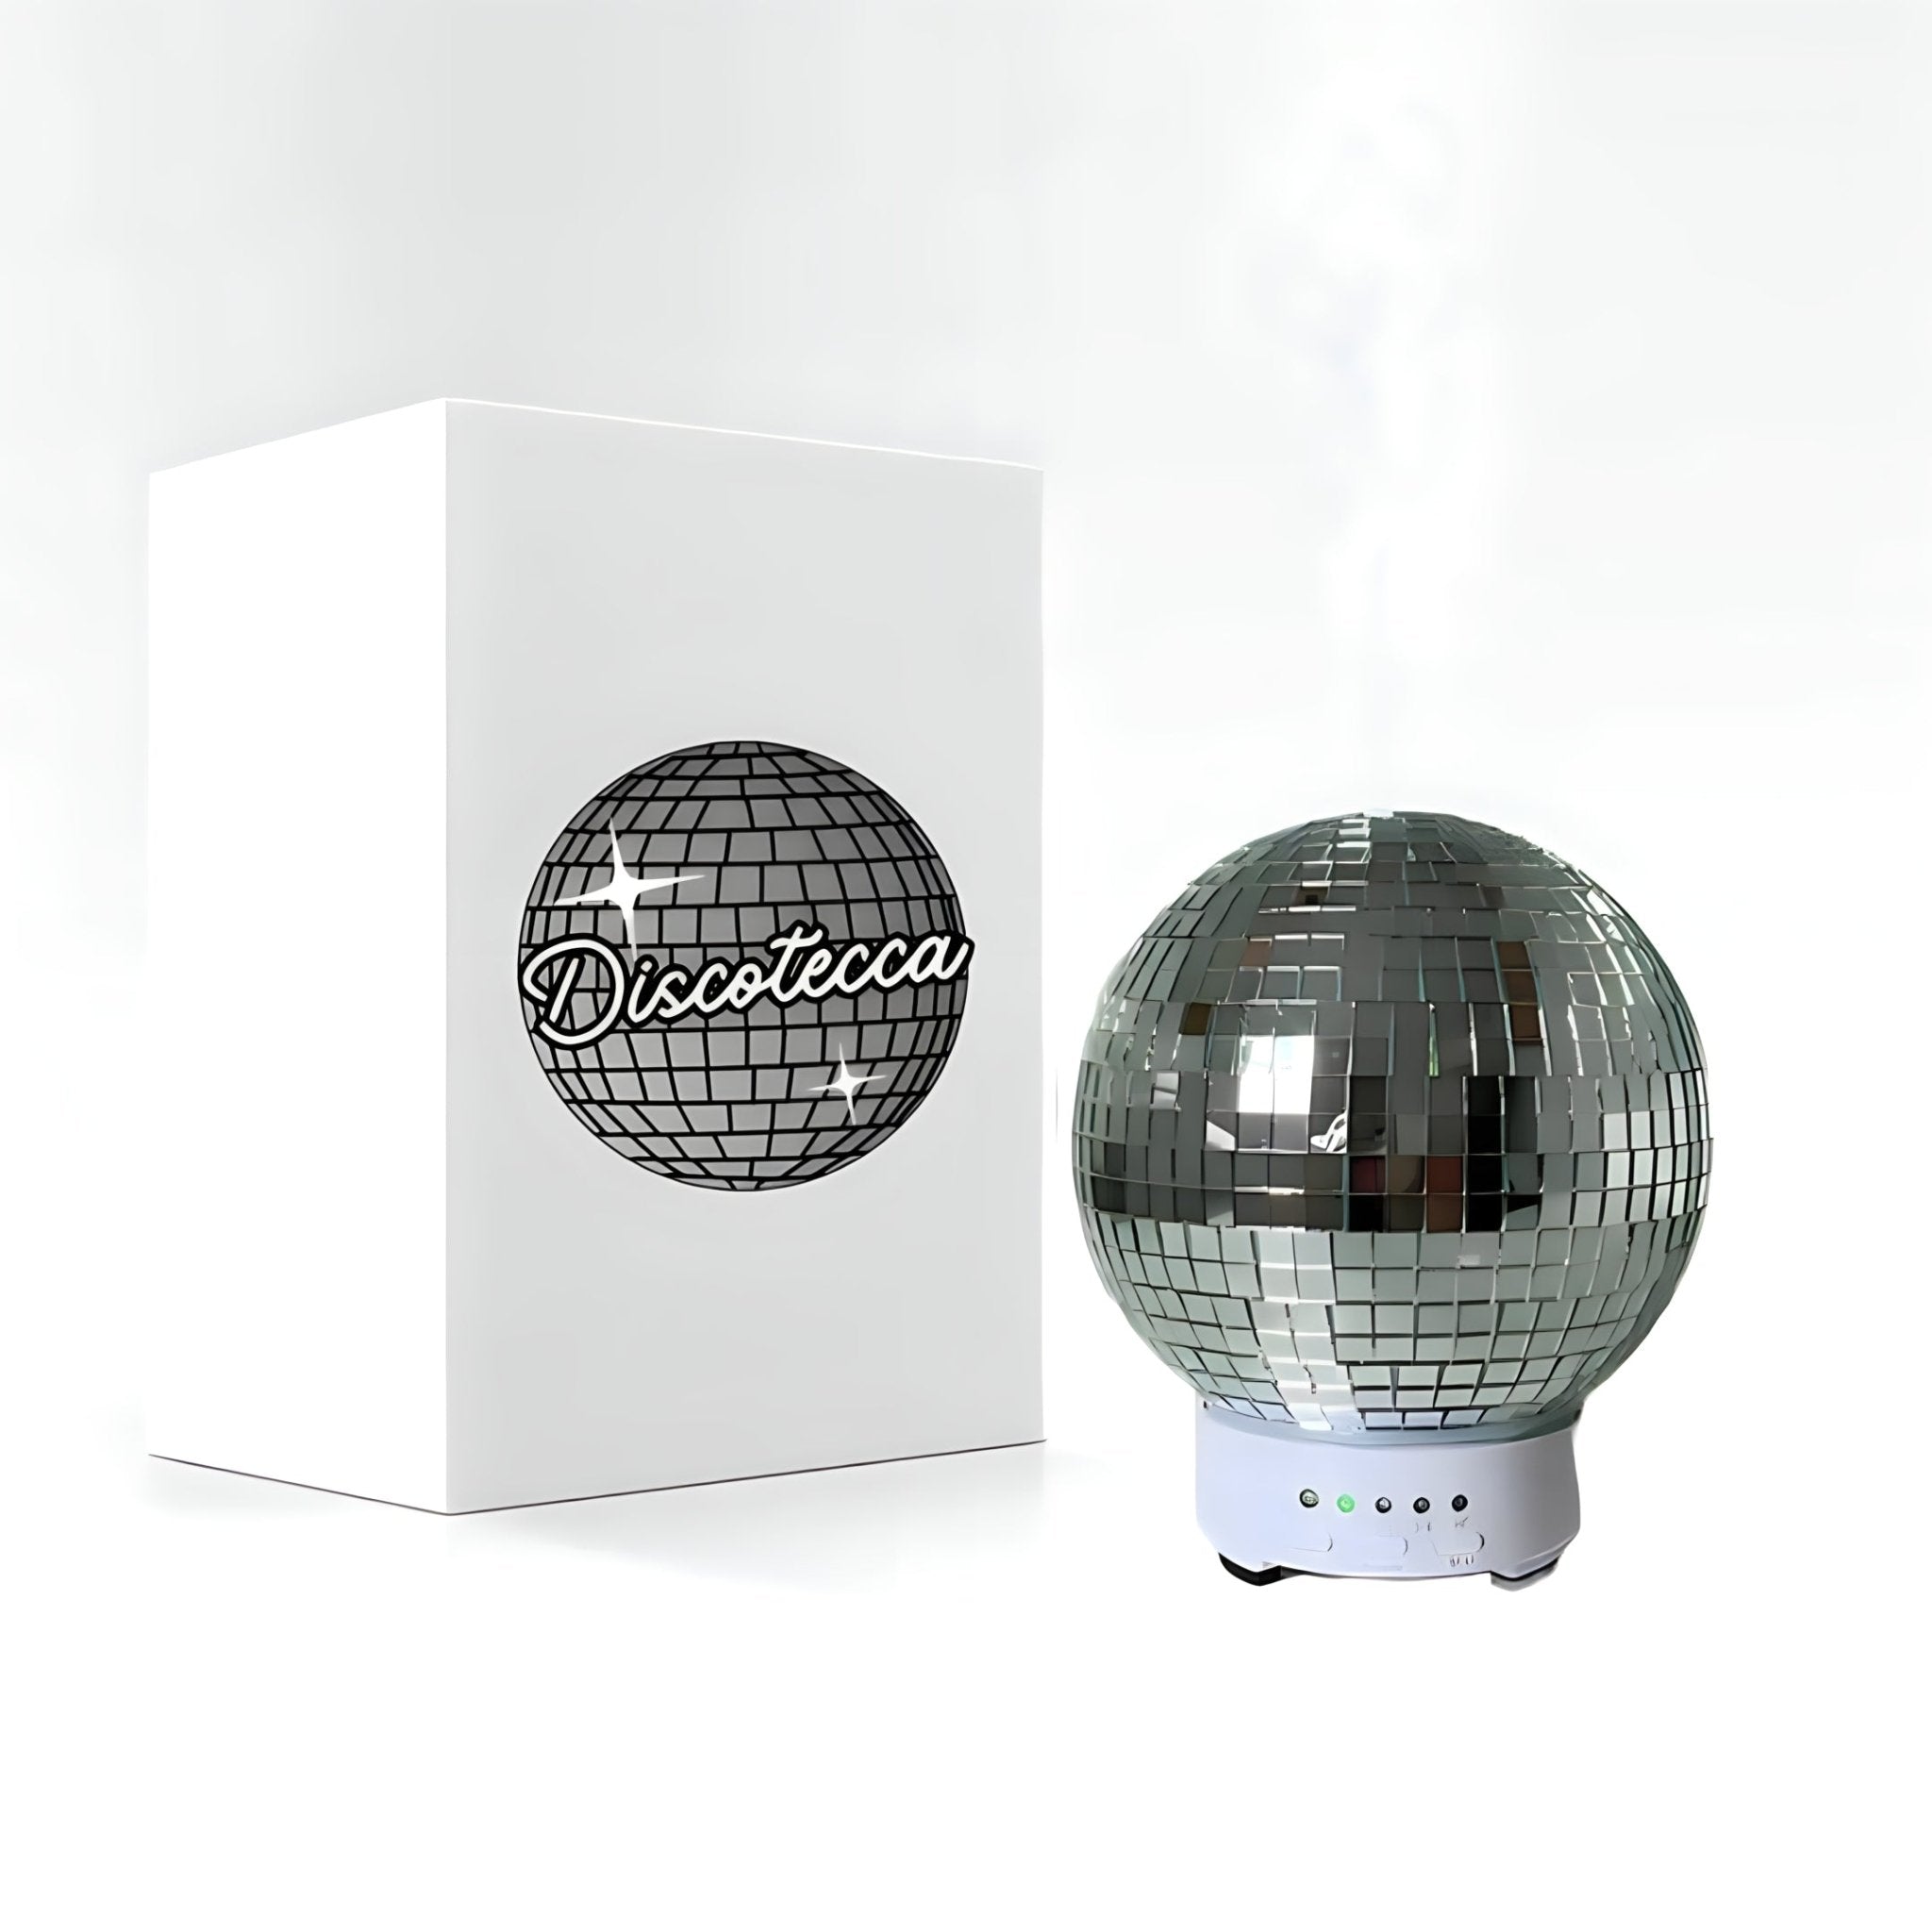 Spinning Disco Ball Aromatherapy Diffuser – Discotecca